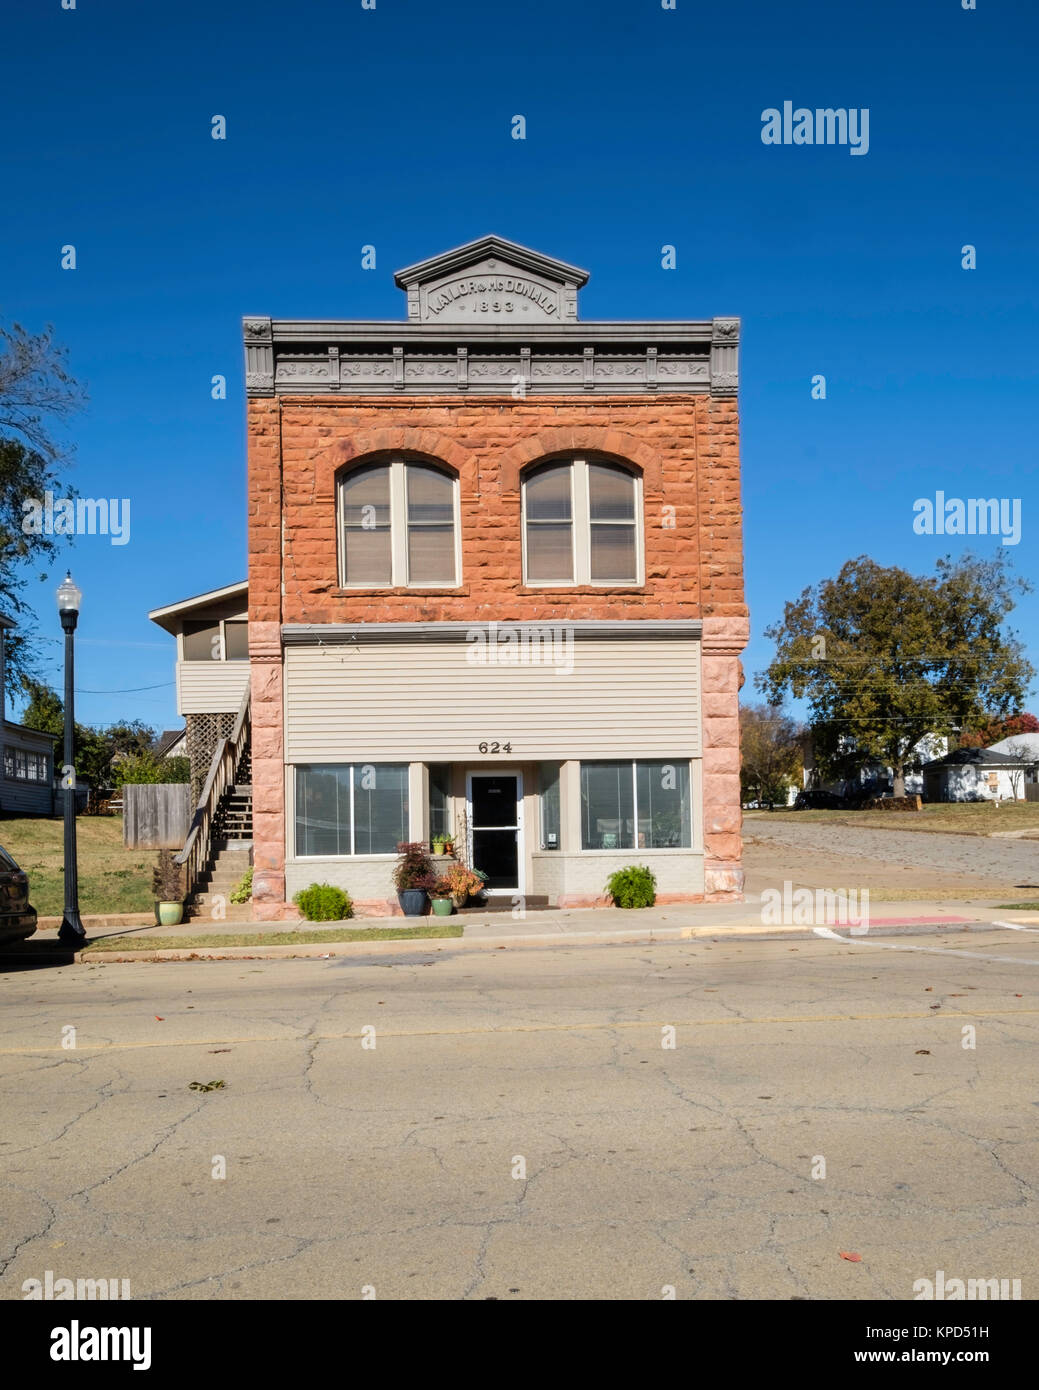 Kaylor & McDonald building, circa 1893, built of red native sandstone, 624 E Oklahoma Ave., Guthrie, Oklahoma, USA. Guthrie historic district. Stock Photo